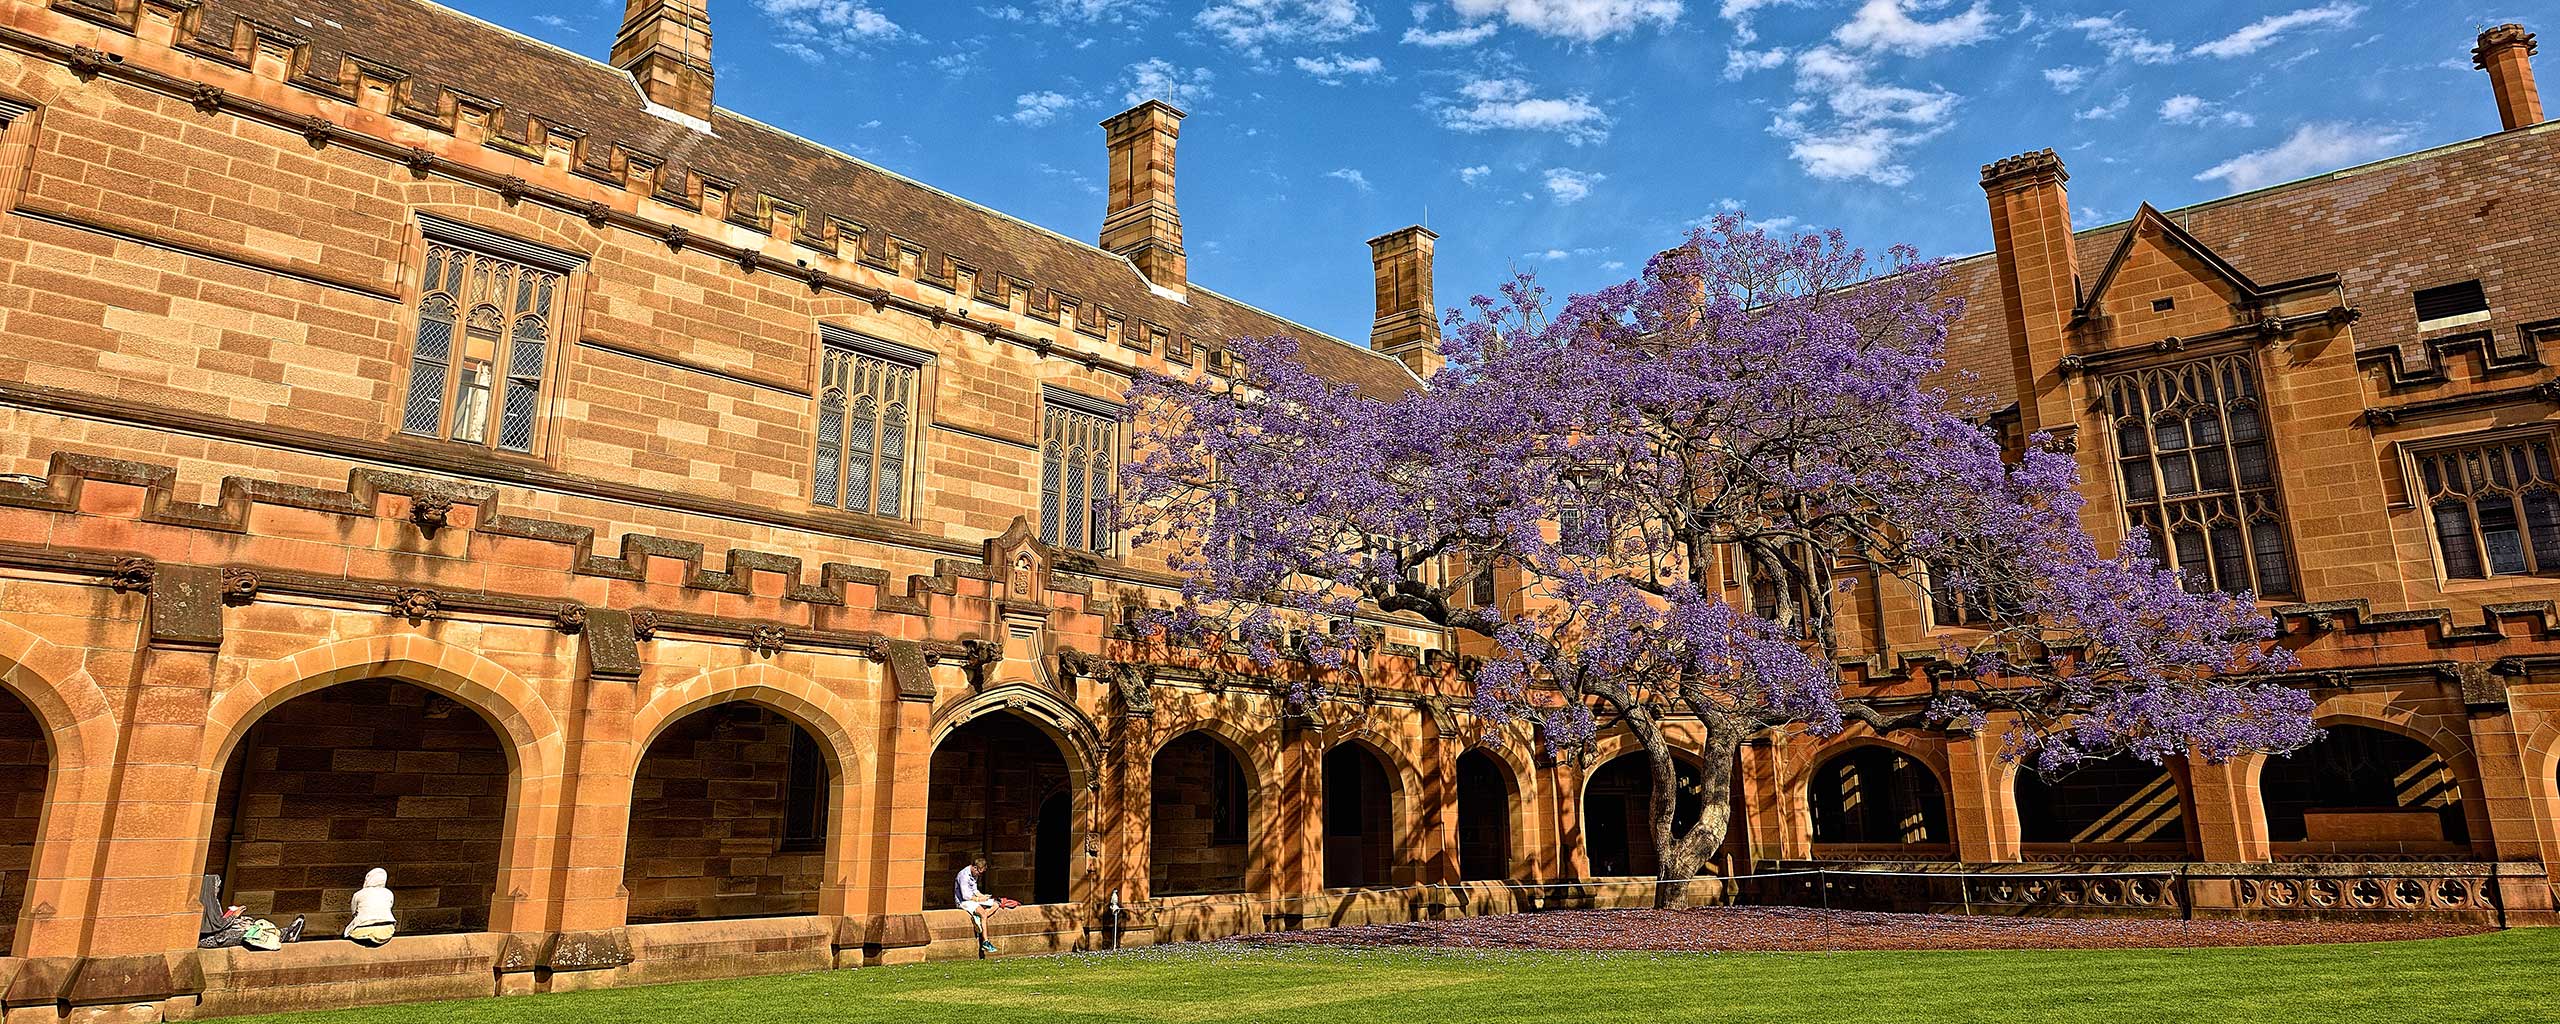 University of Sydney Quadrangle building with purple tree in courtyard